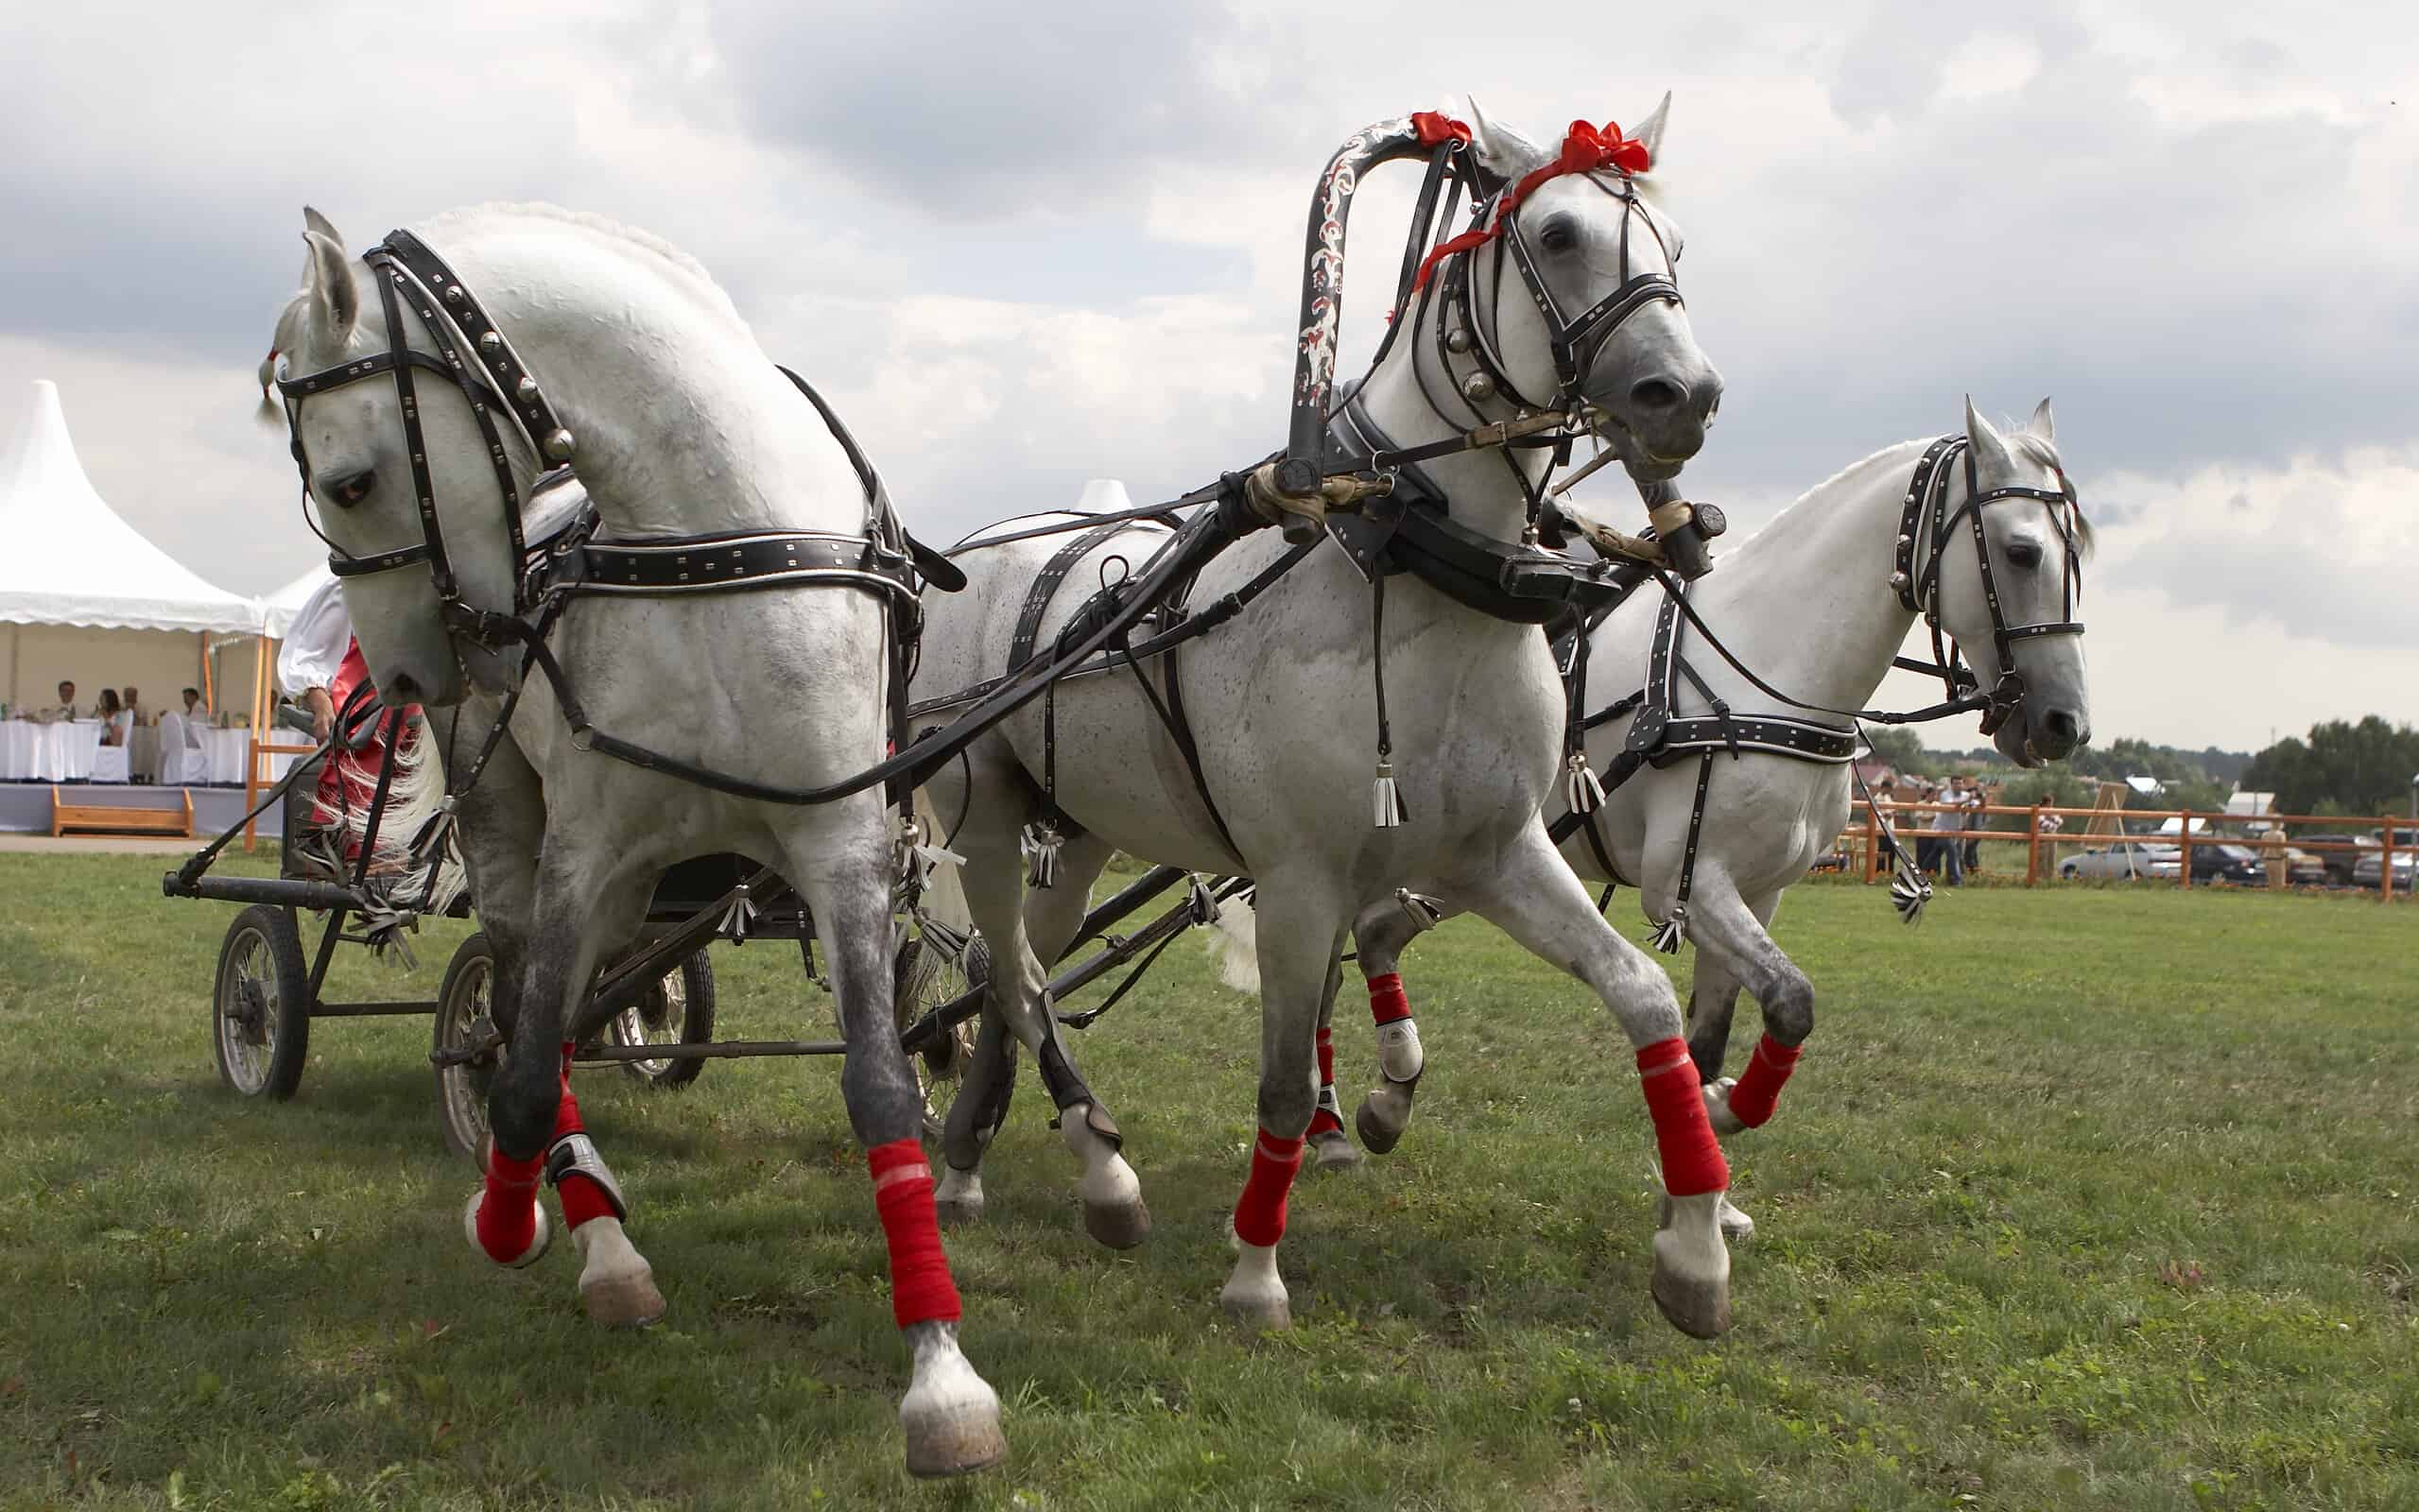 Famous Russian horse trio "troika"